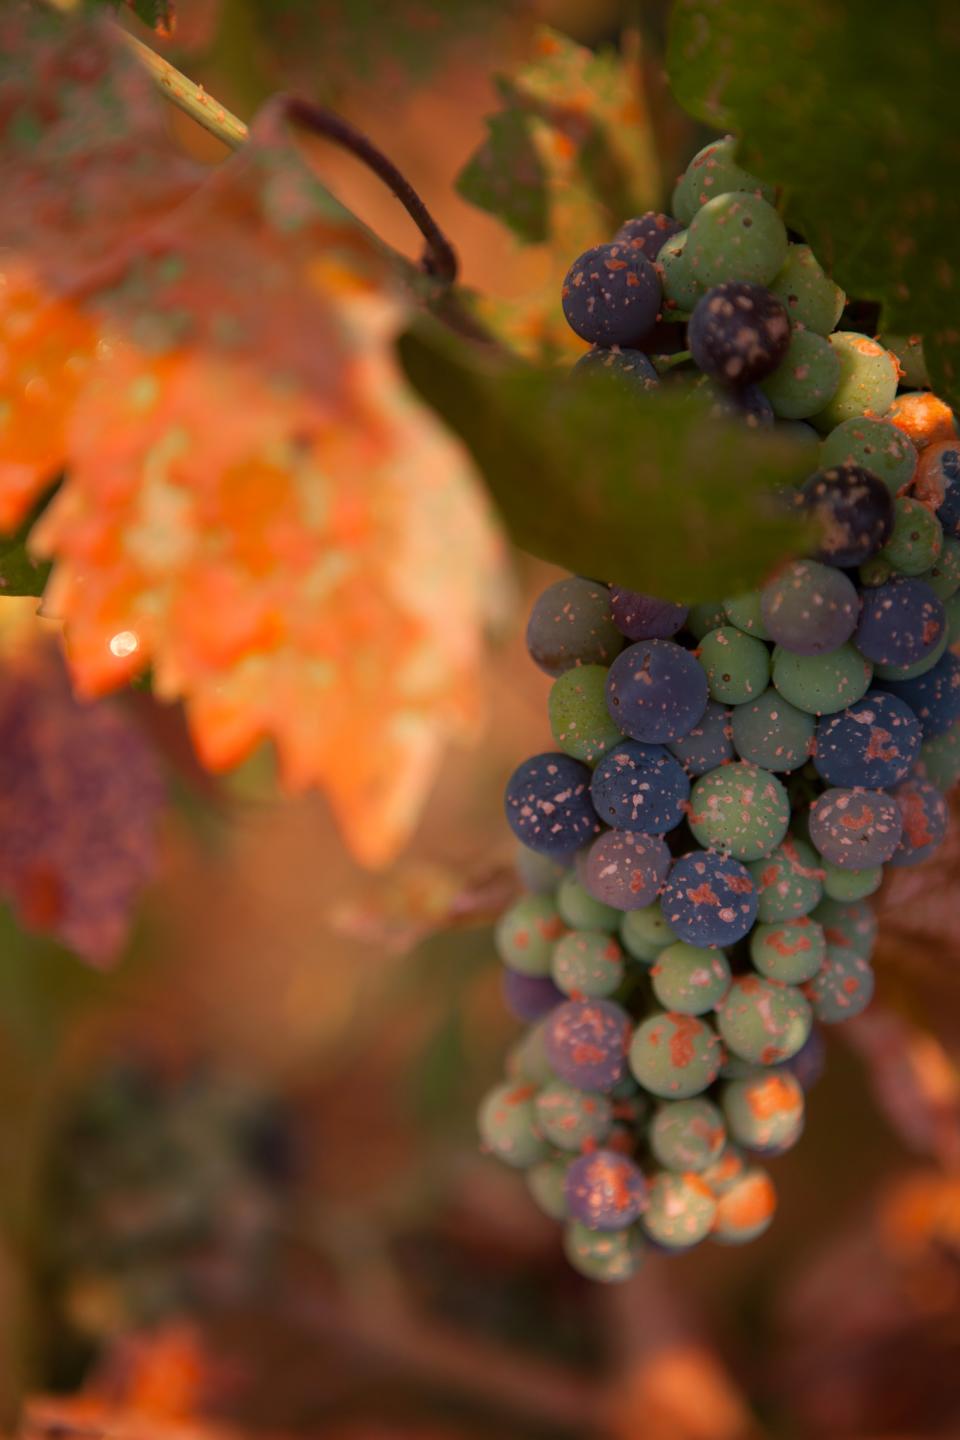 Fire retardant spots wine grapes in a vineyard near the Sand Fire near Plymouth, California